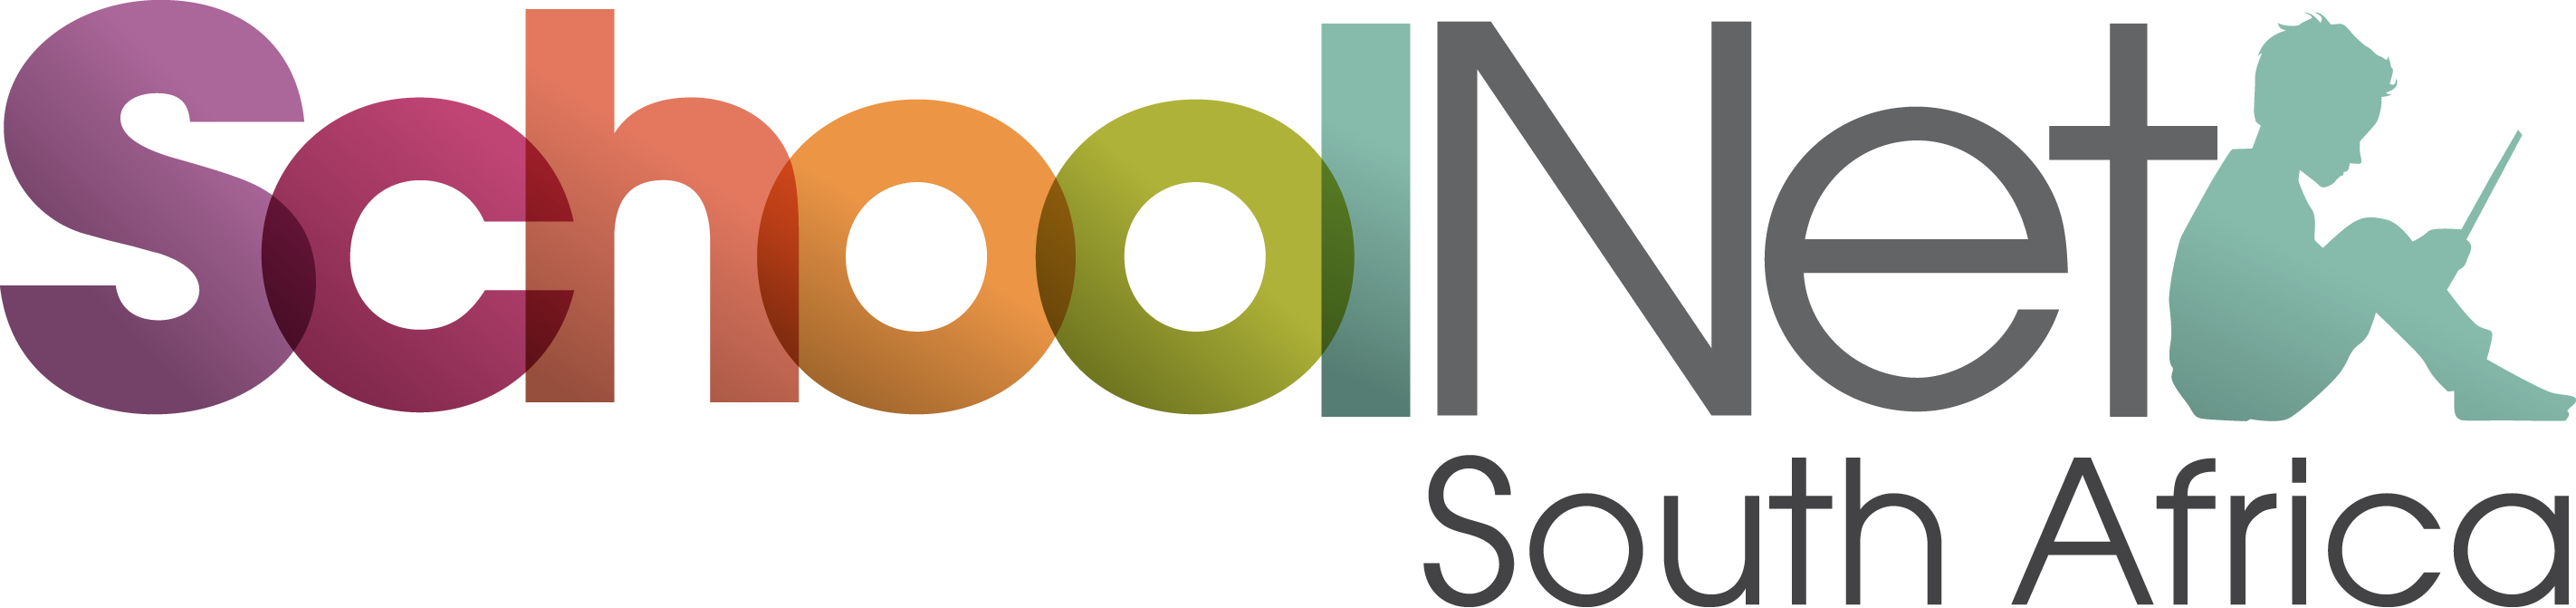 Schoolnet Logo - Schoolnet South Africa Clipart (2845x671), Png Download